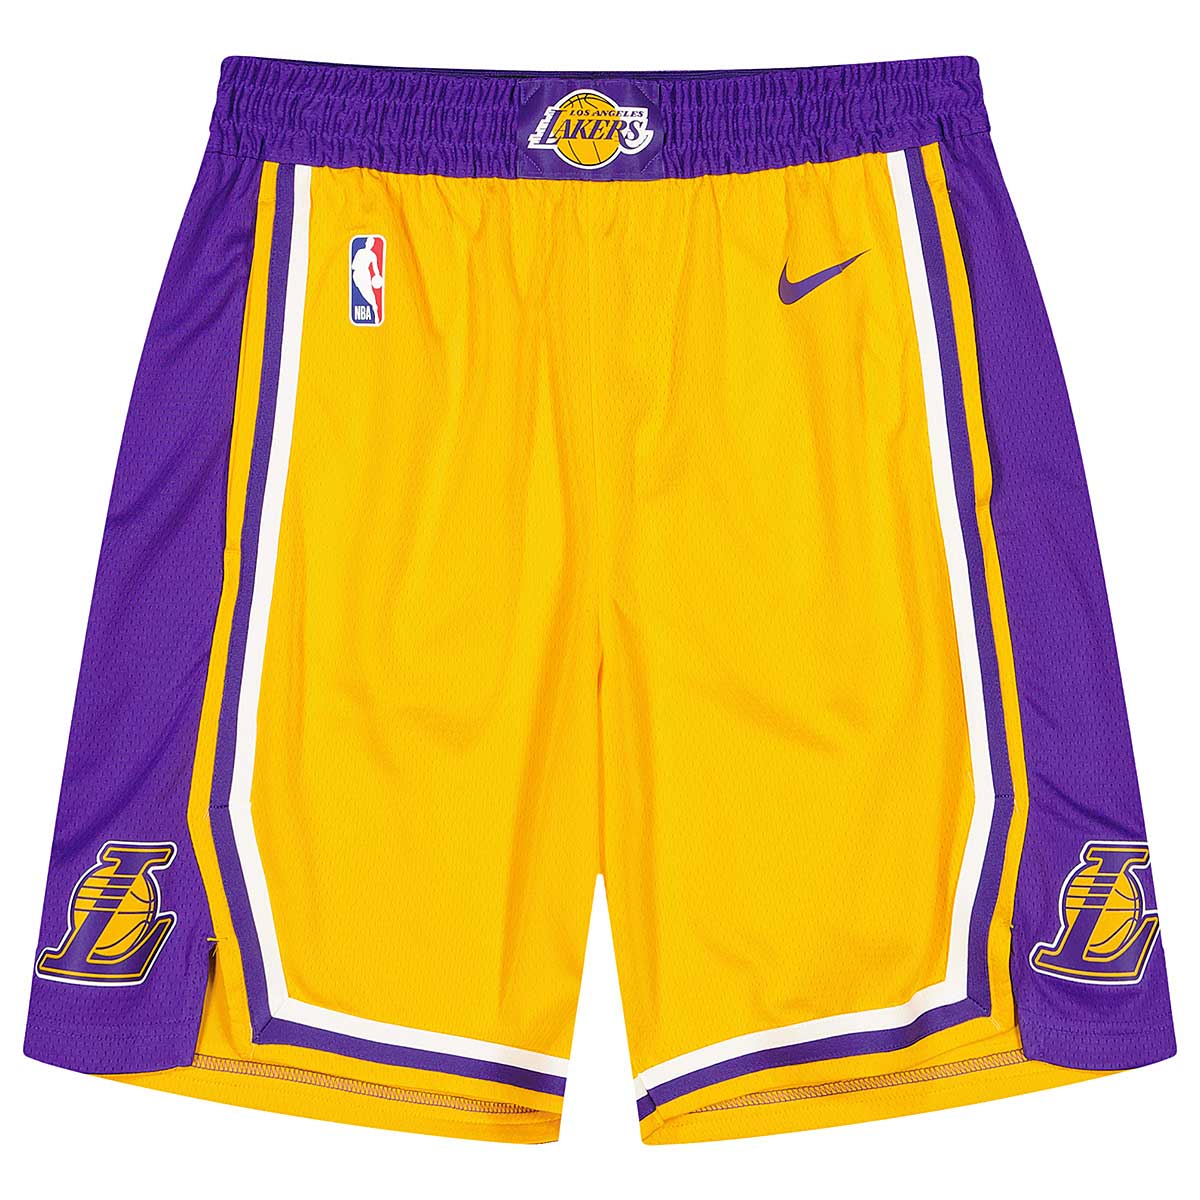 Nike Performance NBA LOS ANGELES LAKERS TRACK SUIT - Club wear - field  purple/amarillo/white/purple 